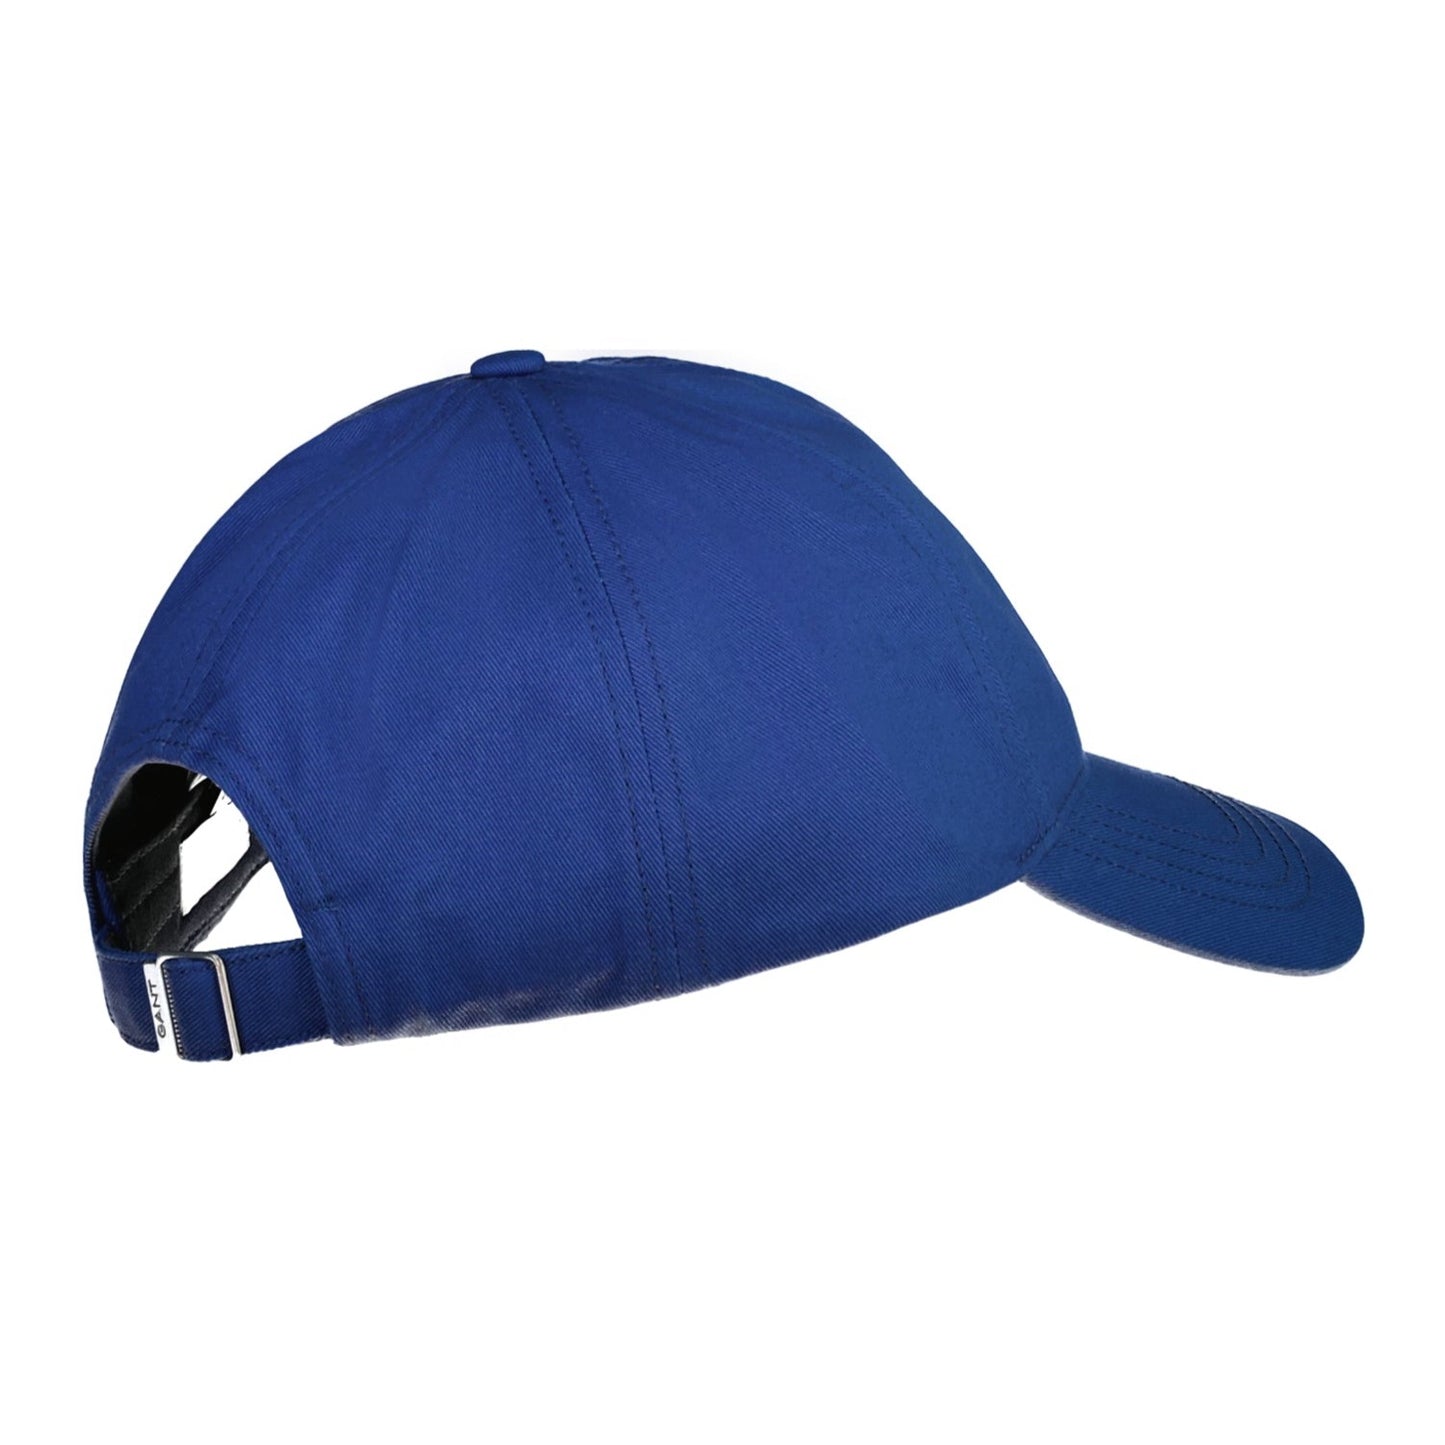 Gant Shield Cap - Mid Blue